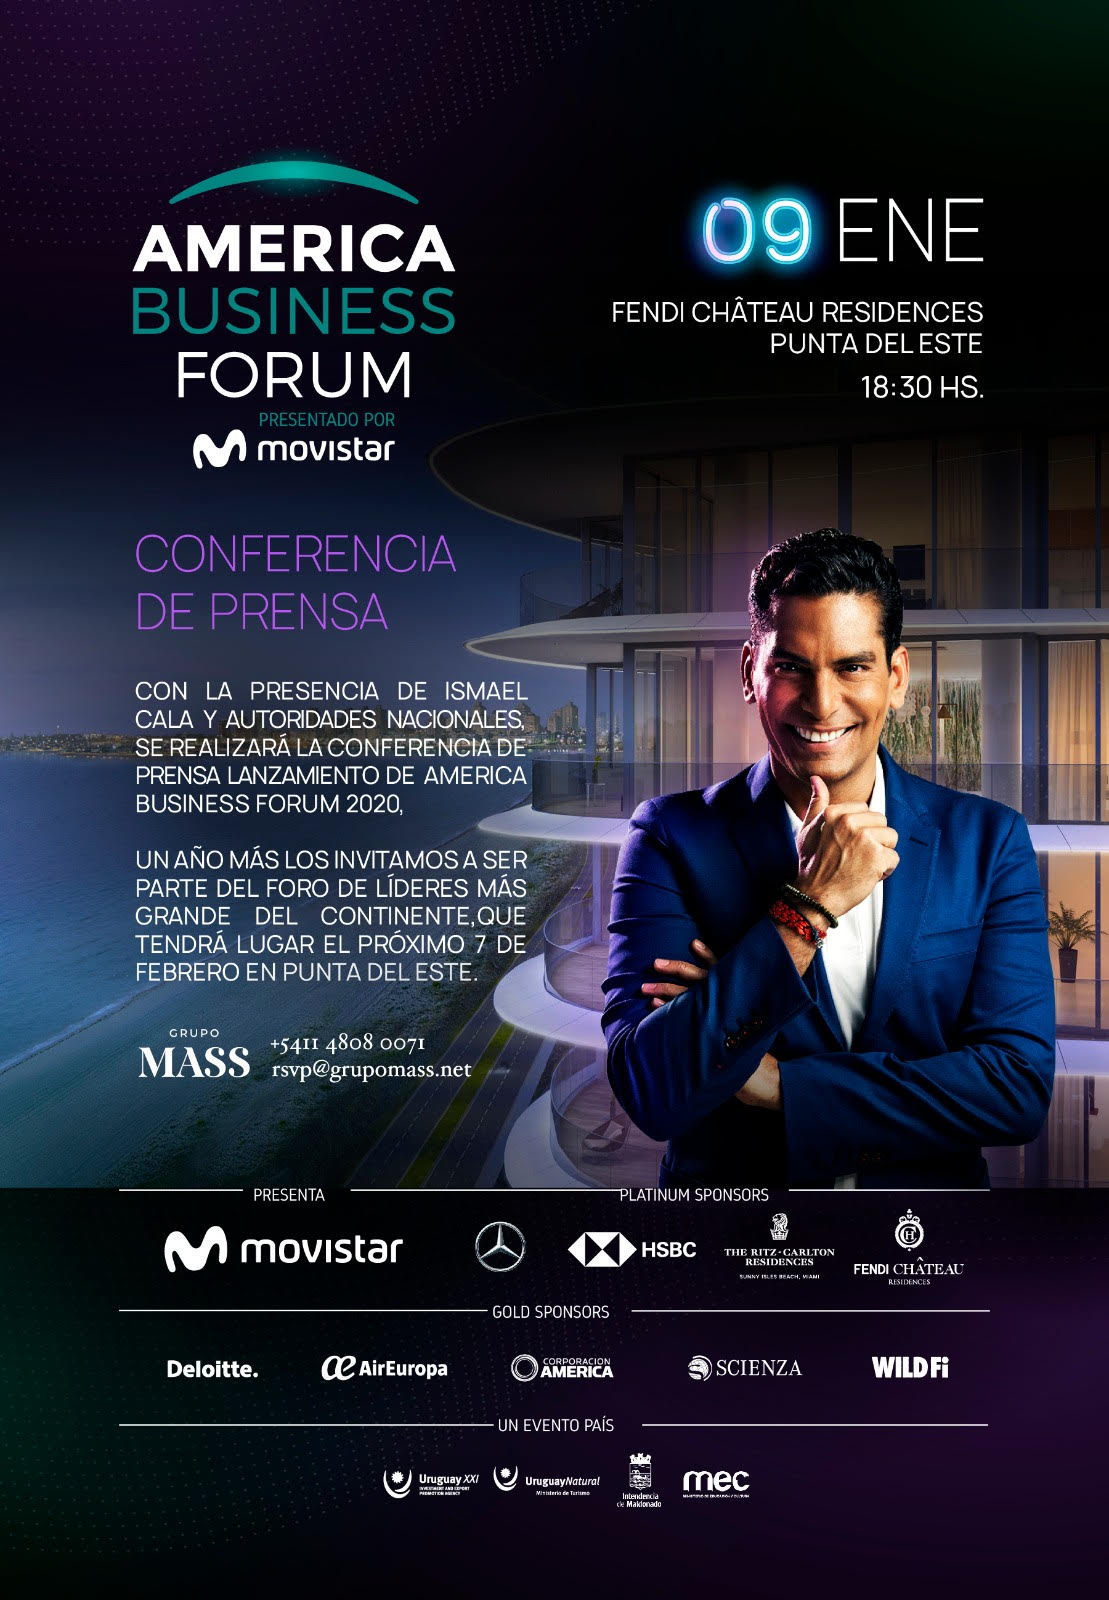 America Business Forum 2020: El carismático e influyente Ismael Cala le da el puntapié inicial